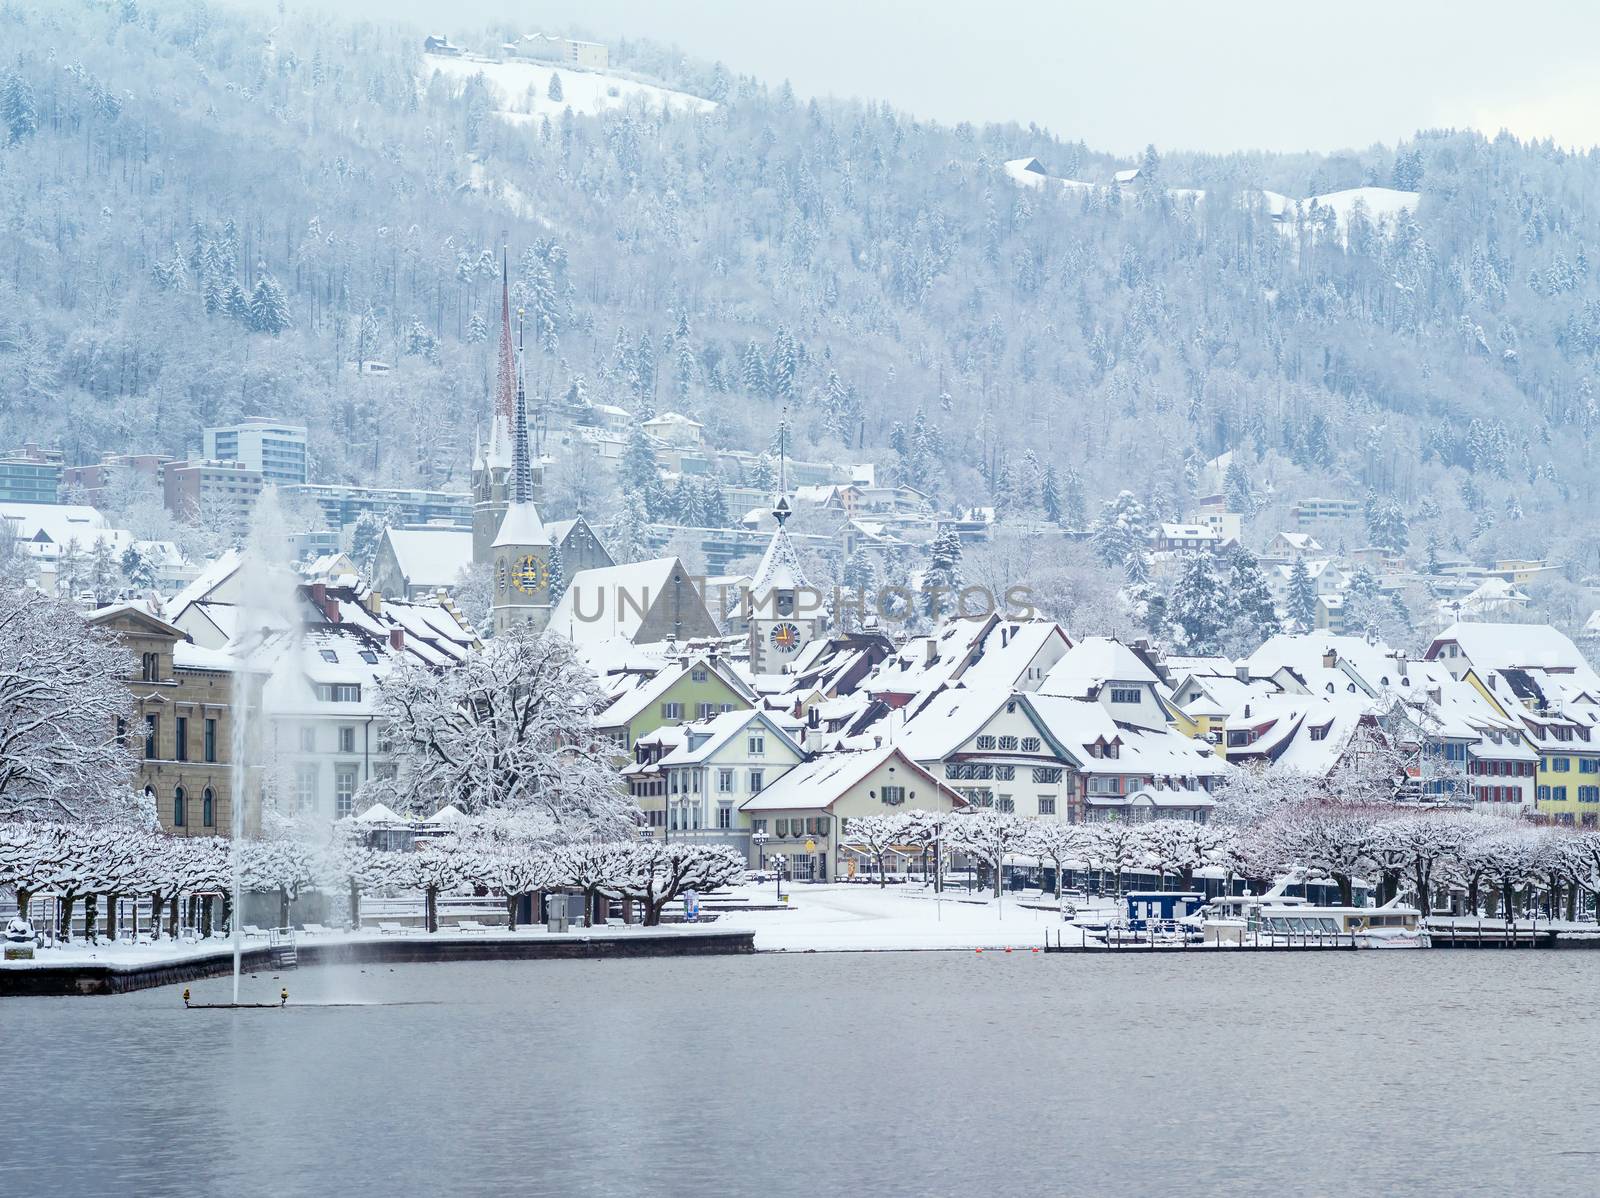 Zug Switzerland during winter by sumners